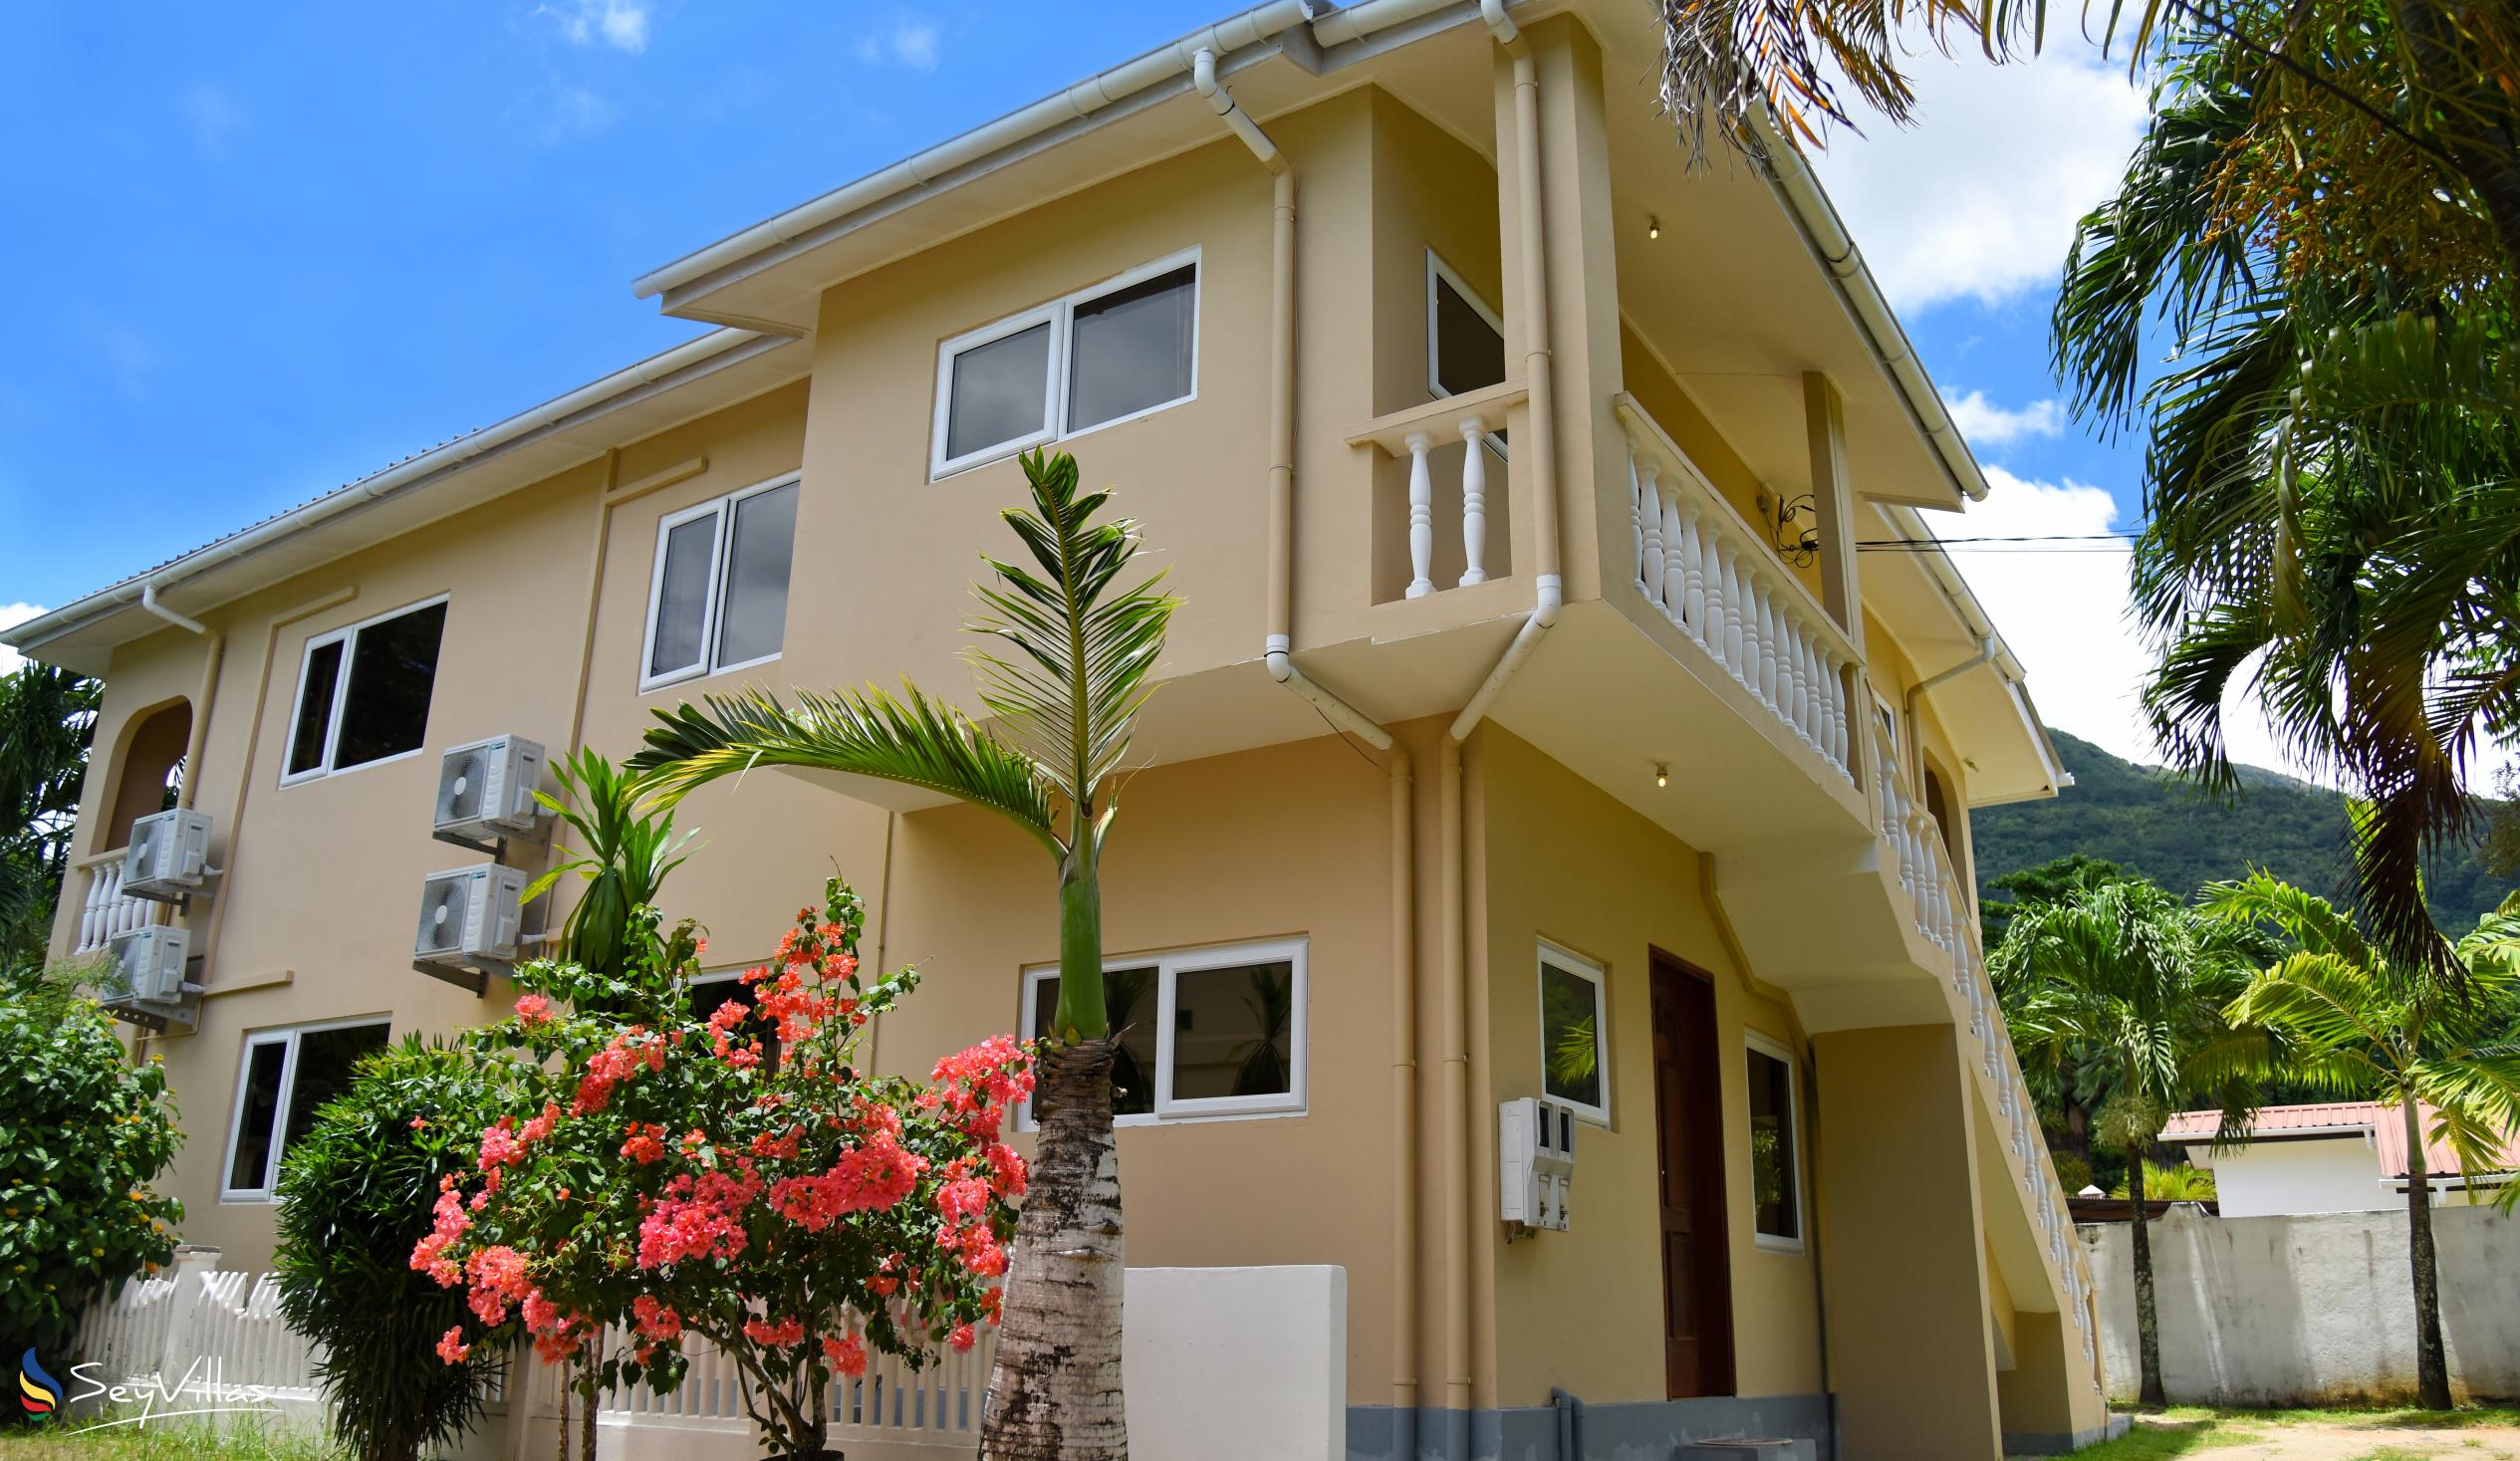 Foto 3: GT Selfcatering Apartments - Aussenbereich - Mahé (Seychellen)